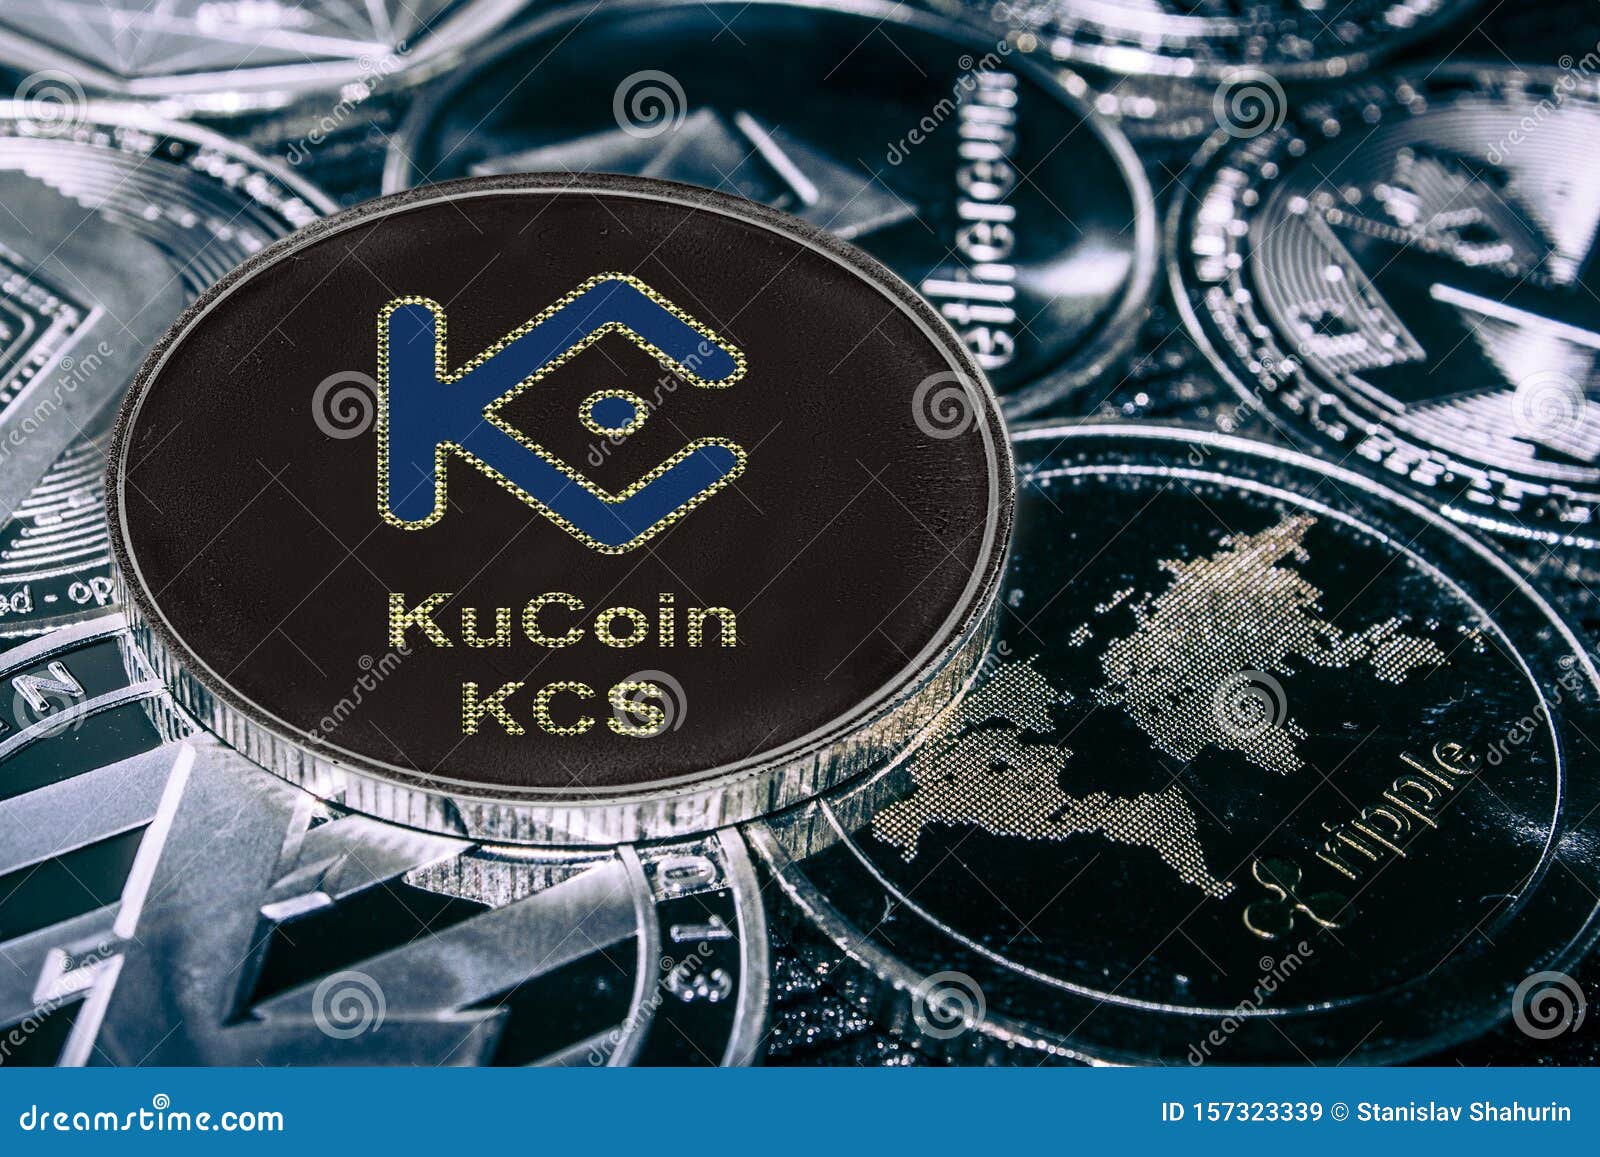 kcs coin